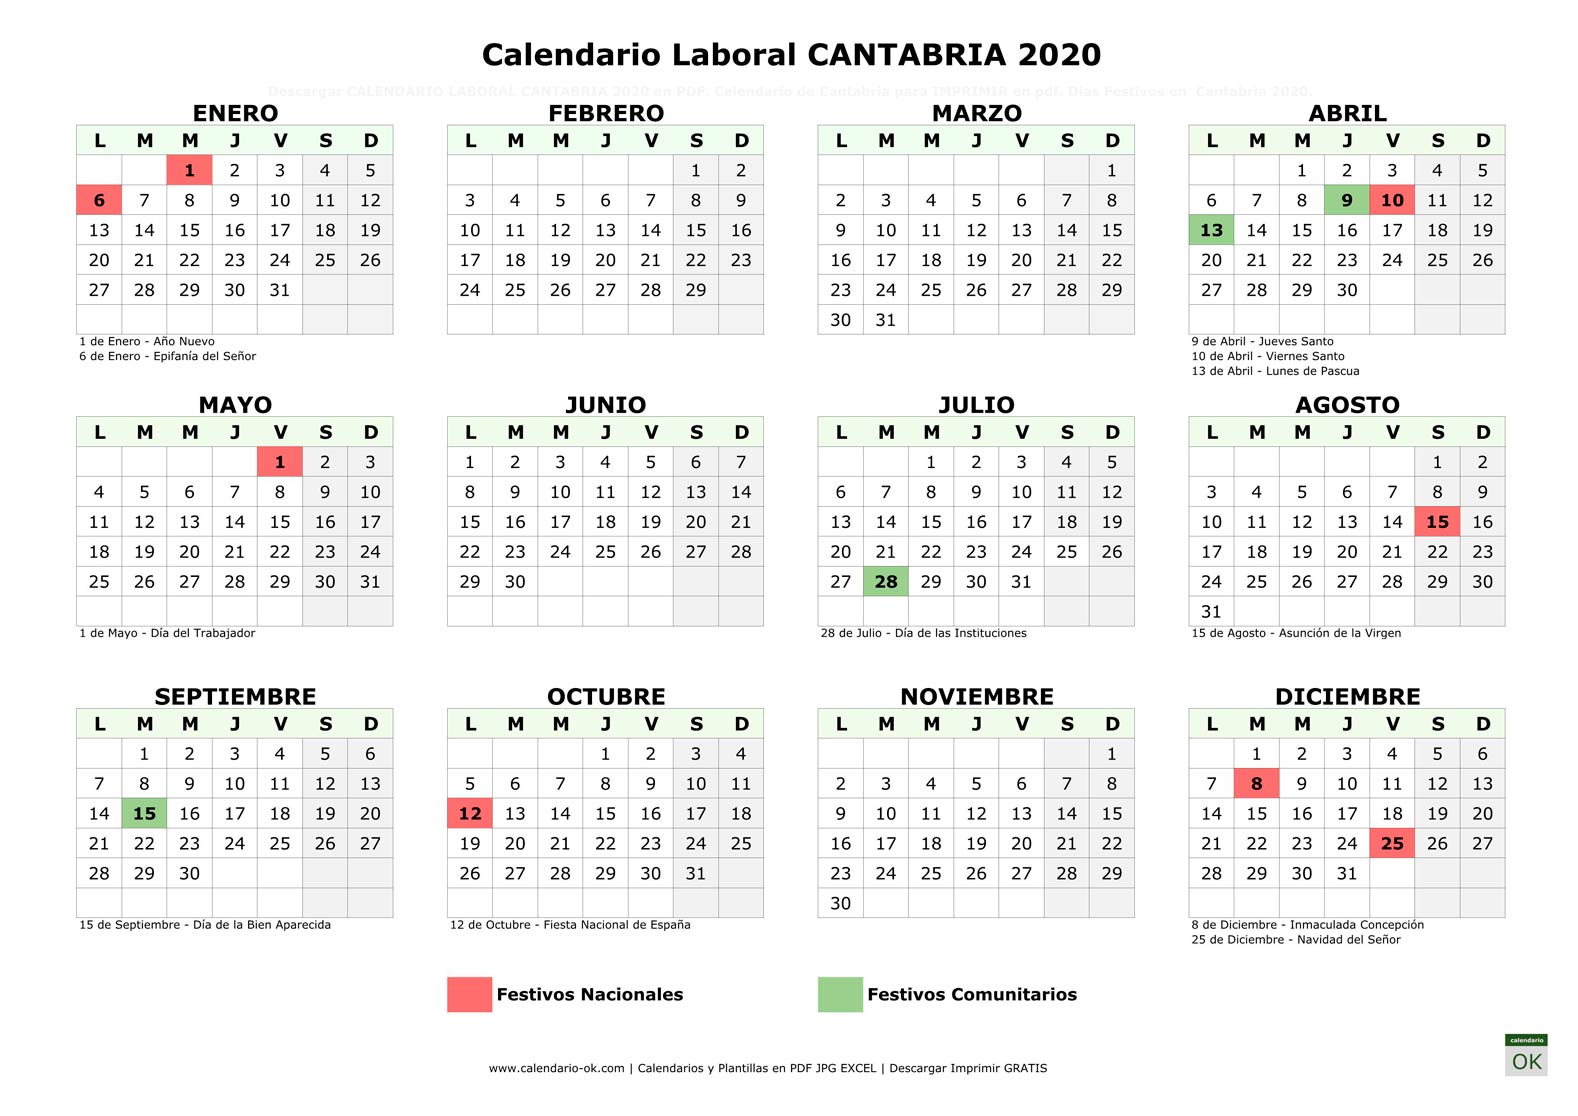 Calendario Laboral CANTABRIA 2020 horizontal